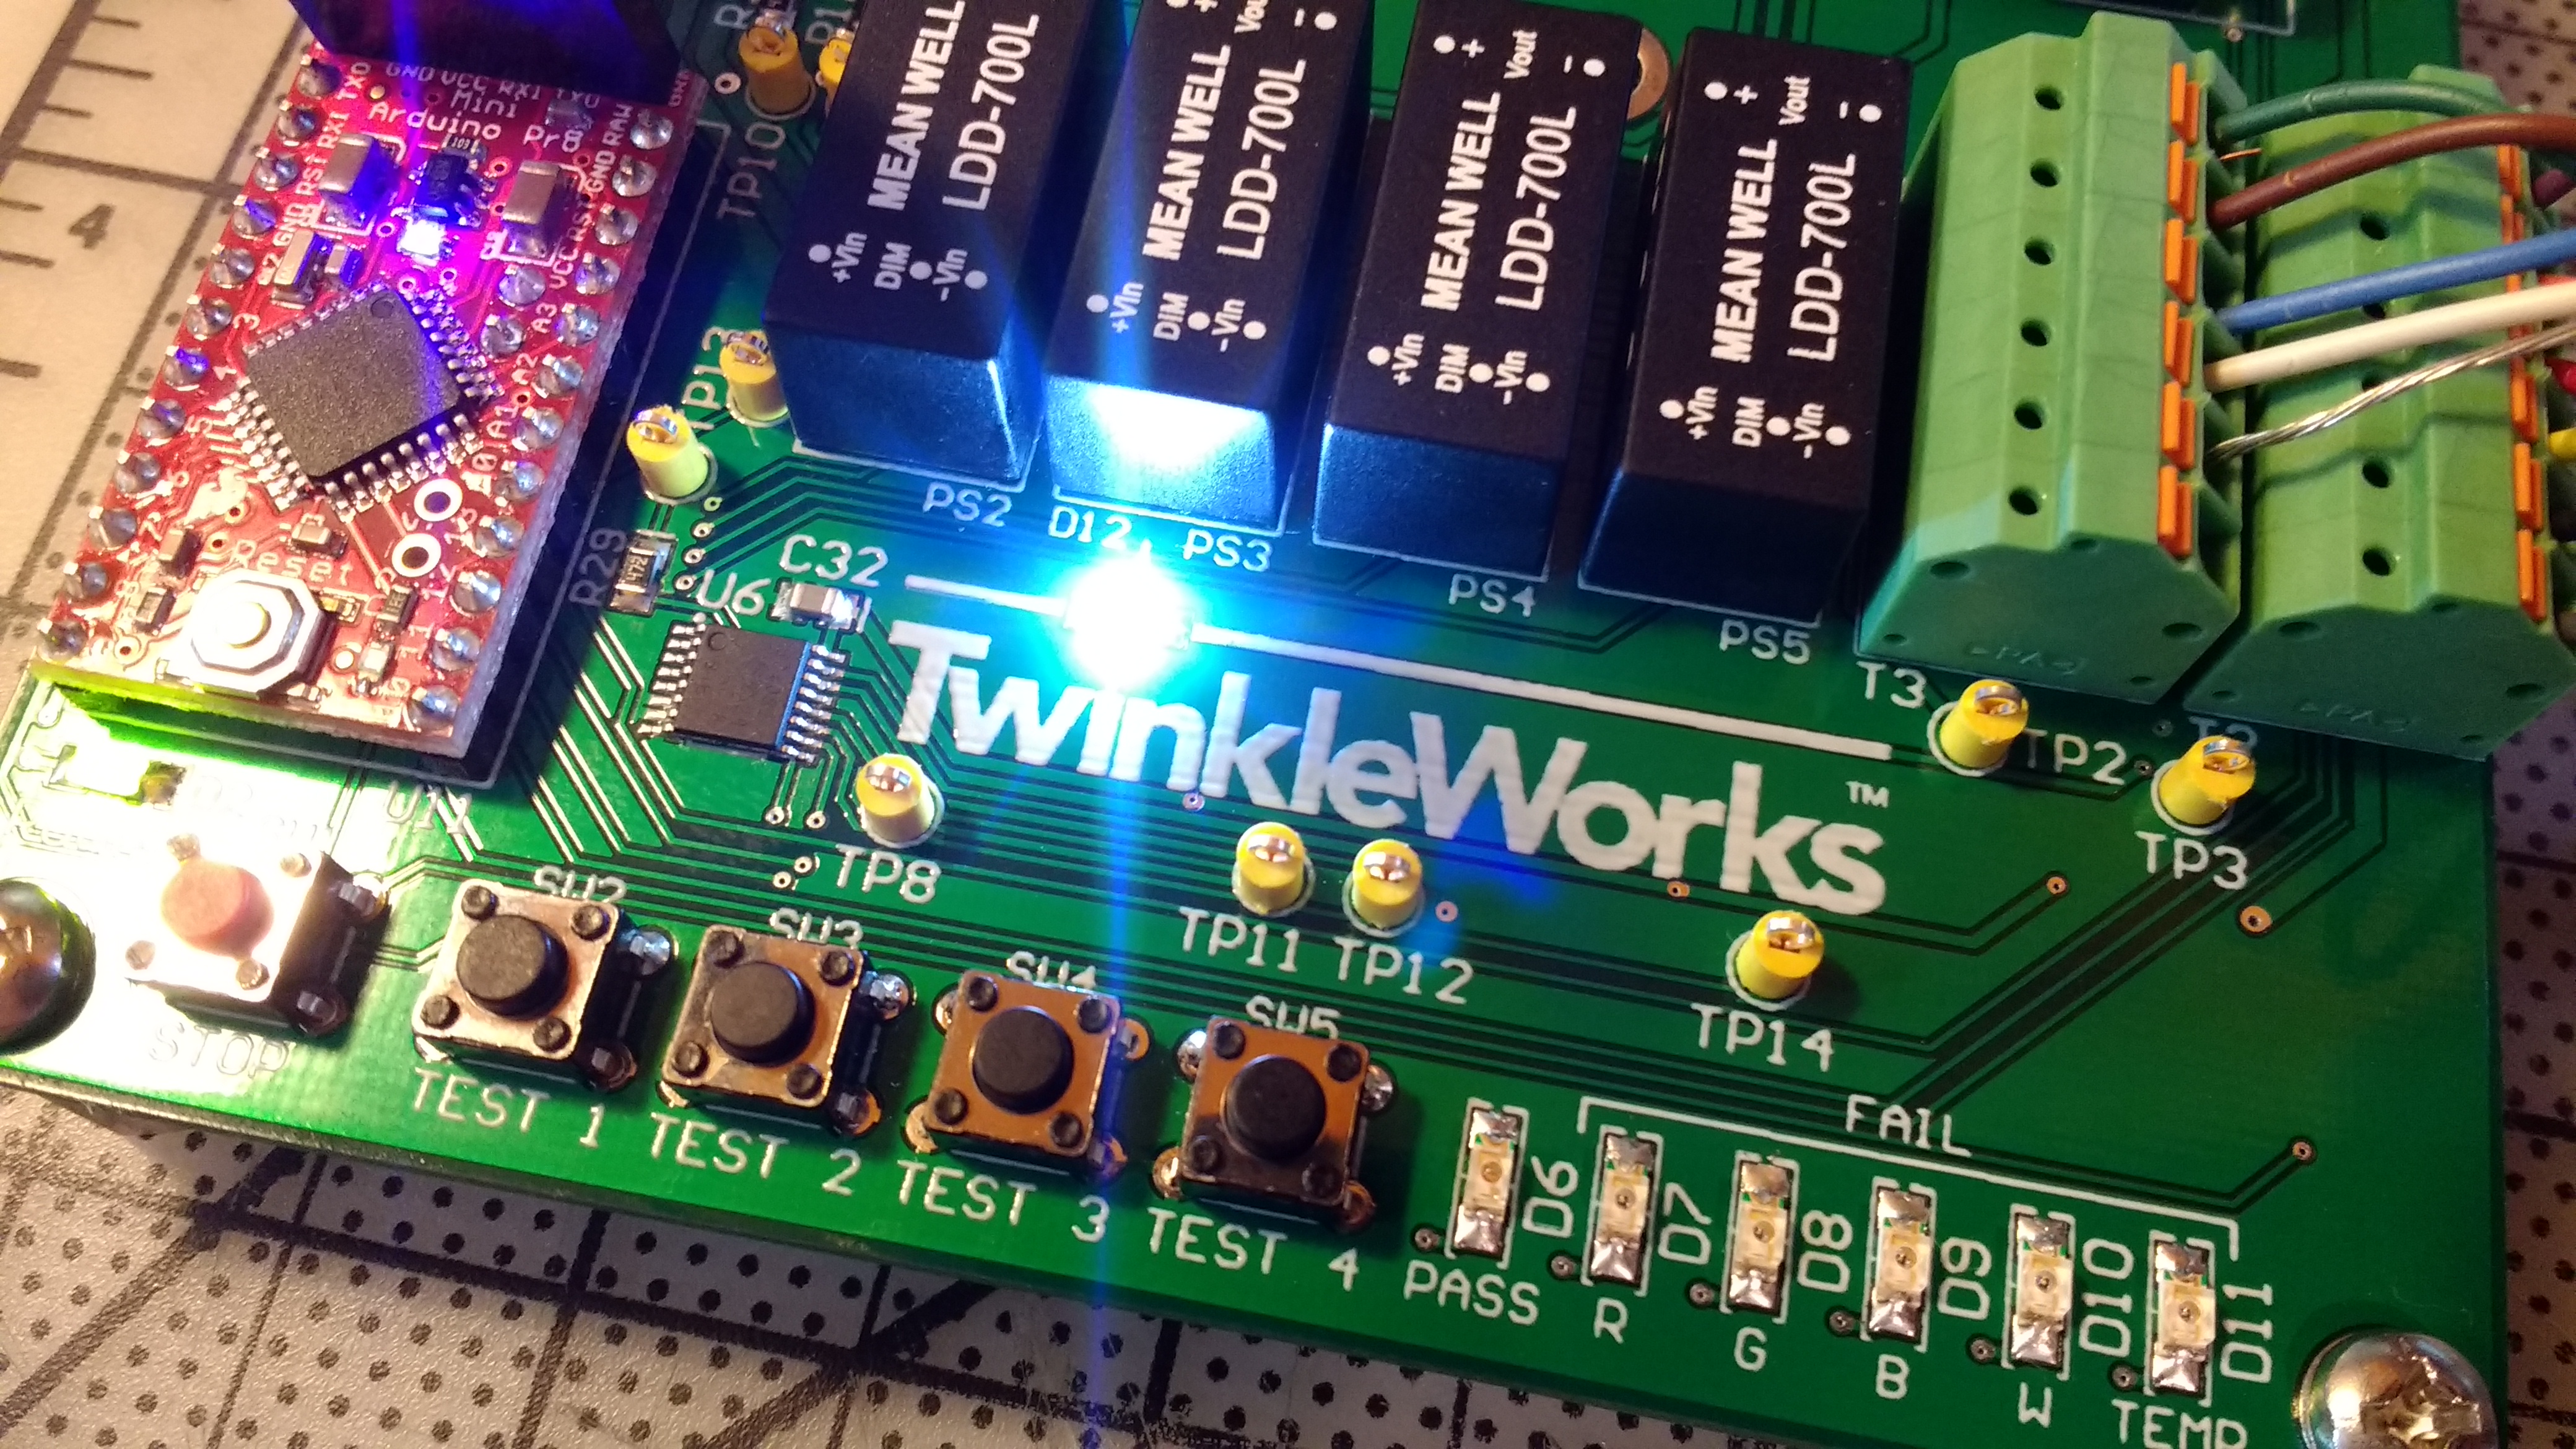 Closeup of TwinkleWorks logo on PCBA